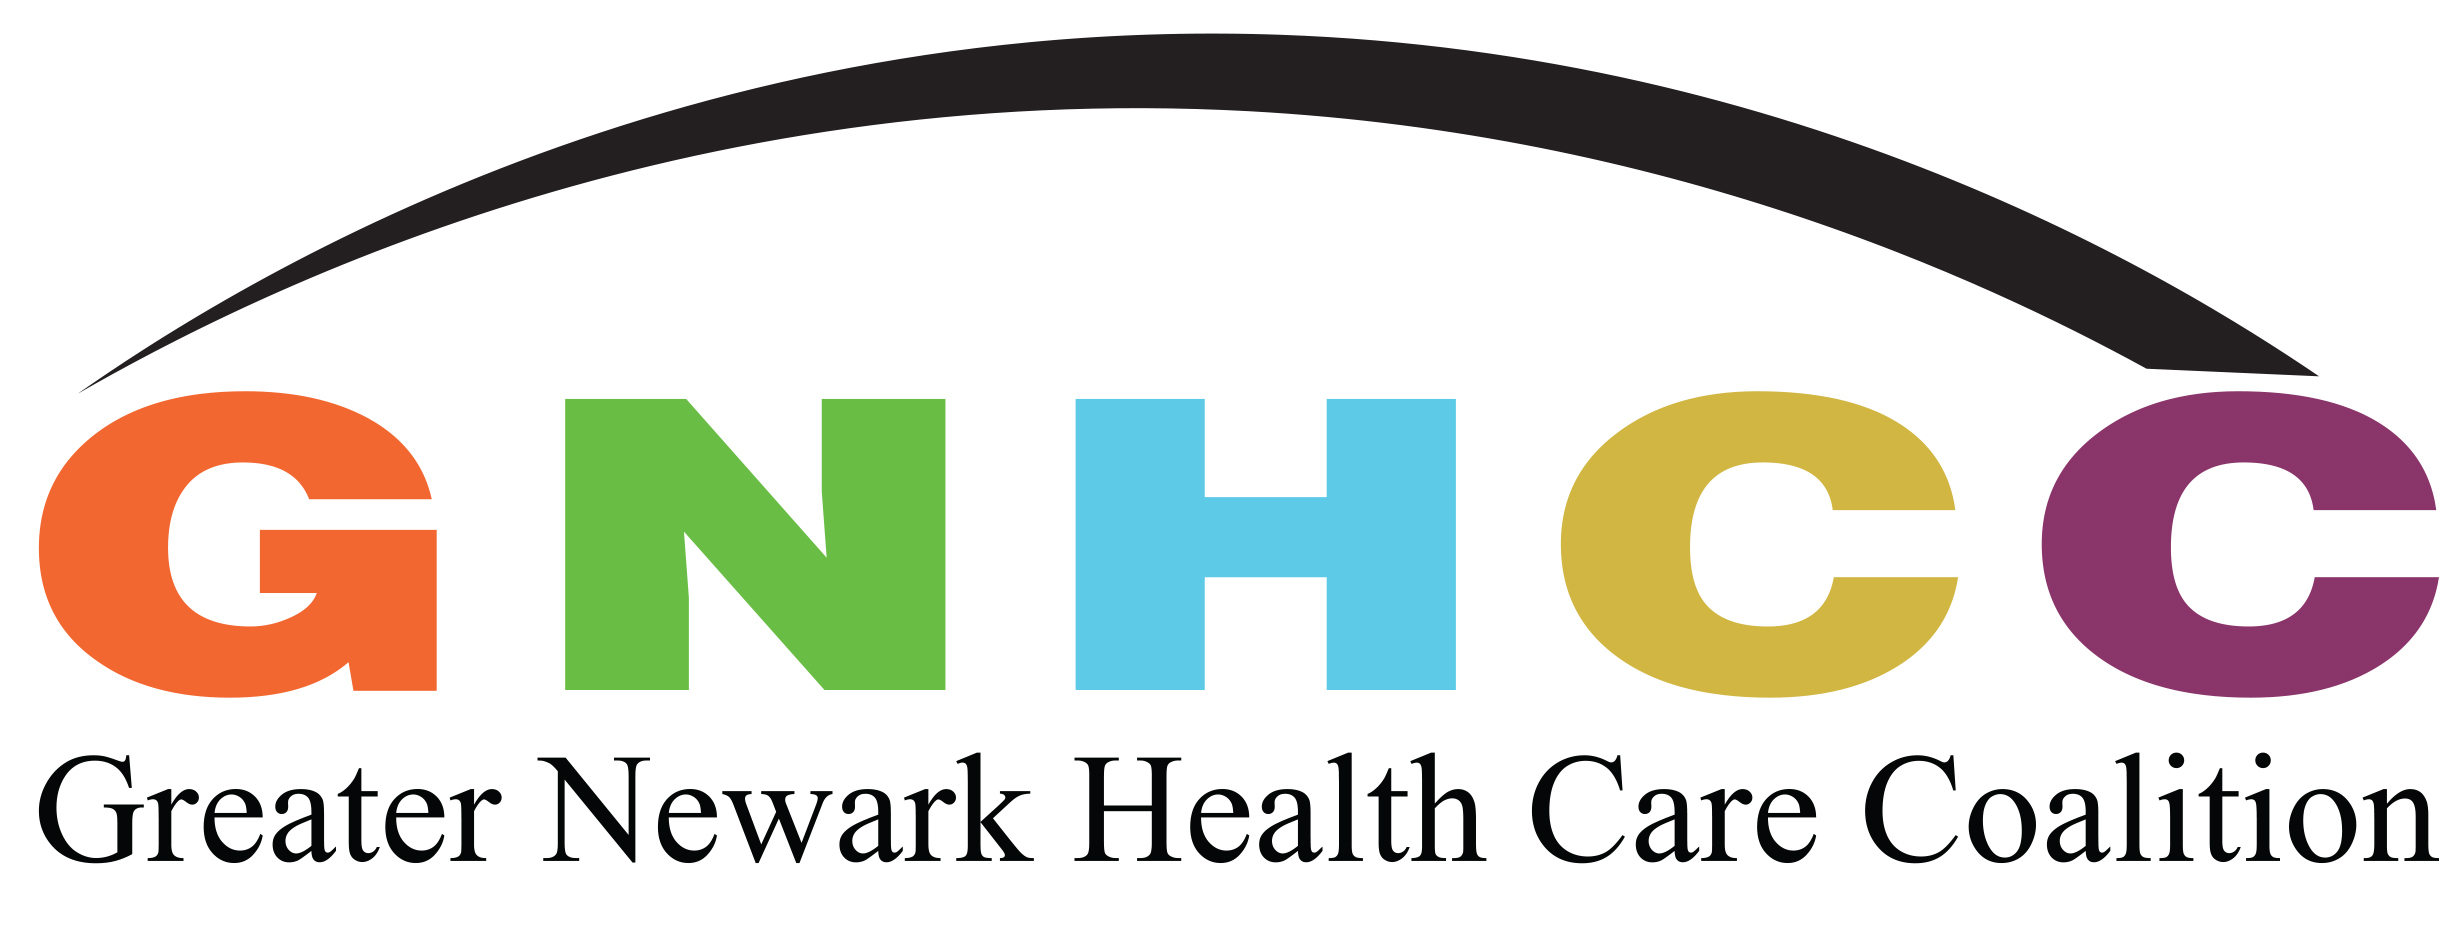 Greater Newark Health Care Coalition